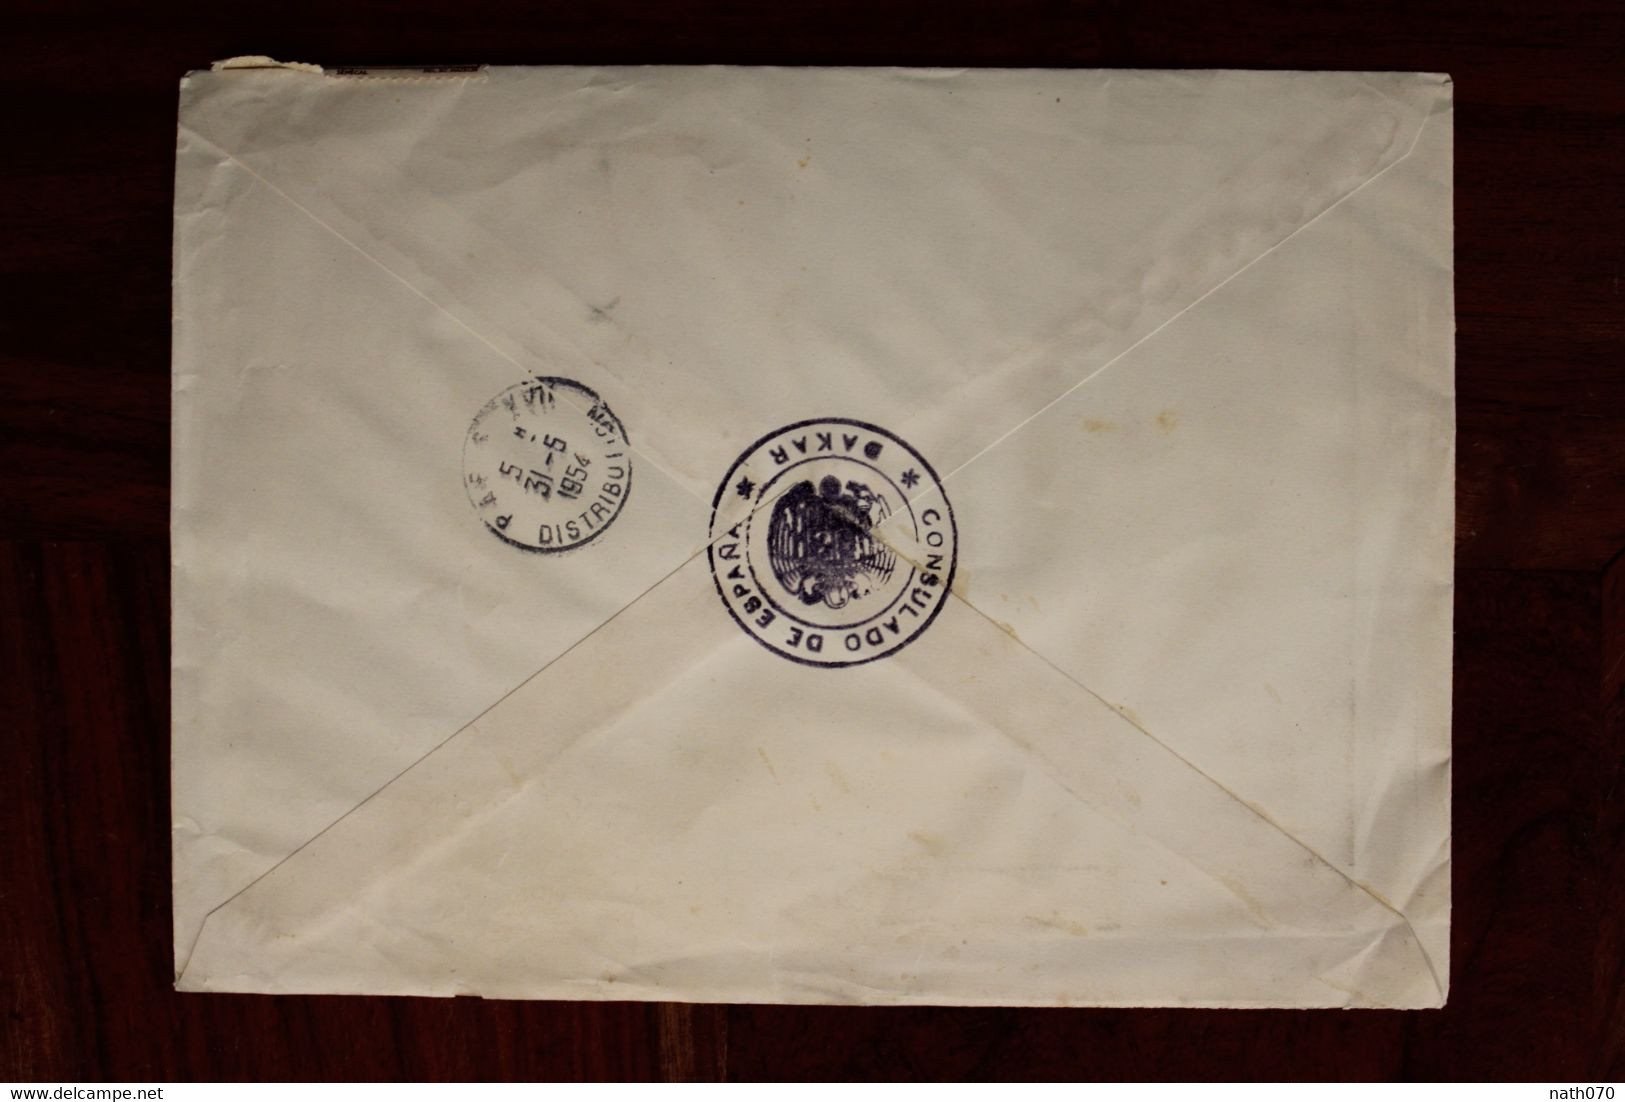 1954 SENEGAL France Enveloppe Consulado Espana Spain Espagne Cover Air Mail Colonies AOF Recommandé Registered R - Covers & Documents